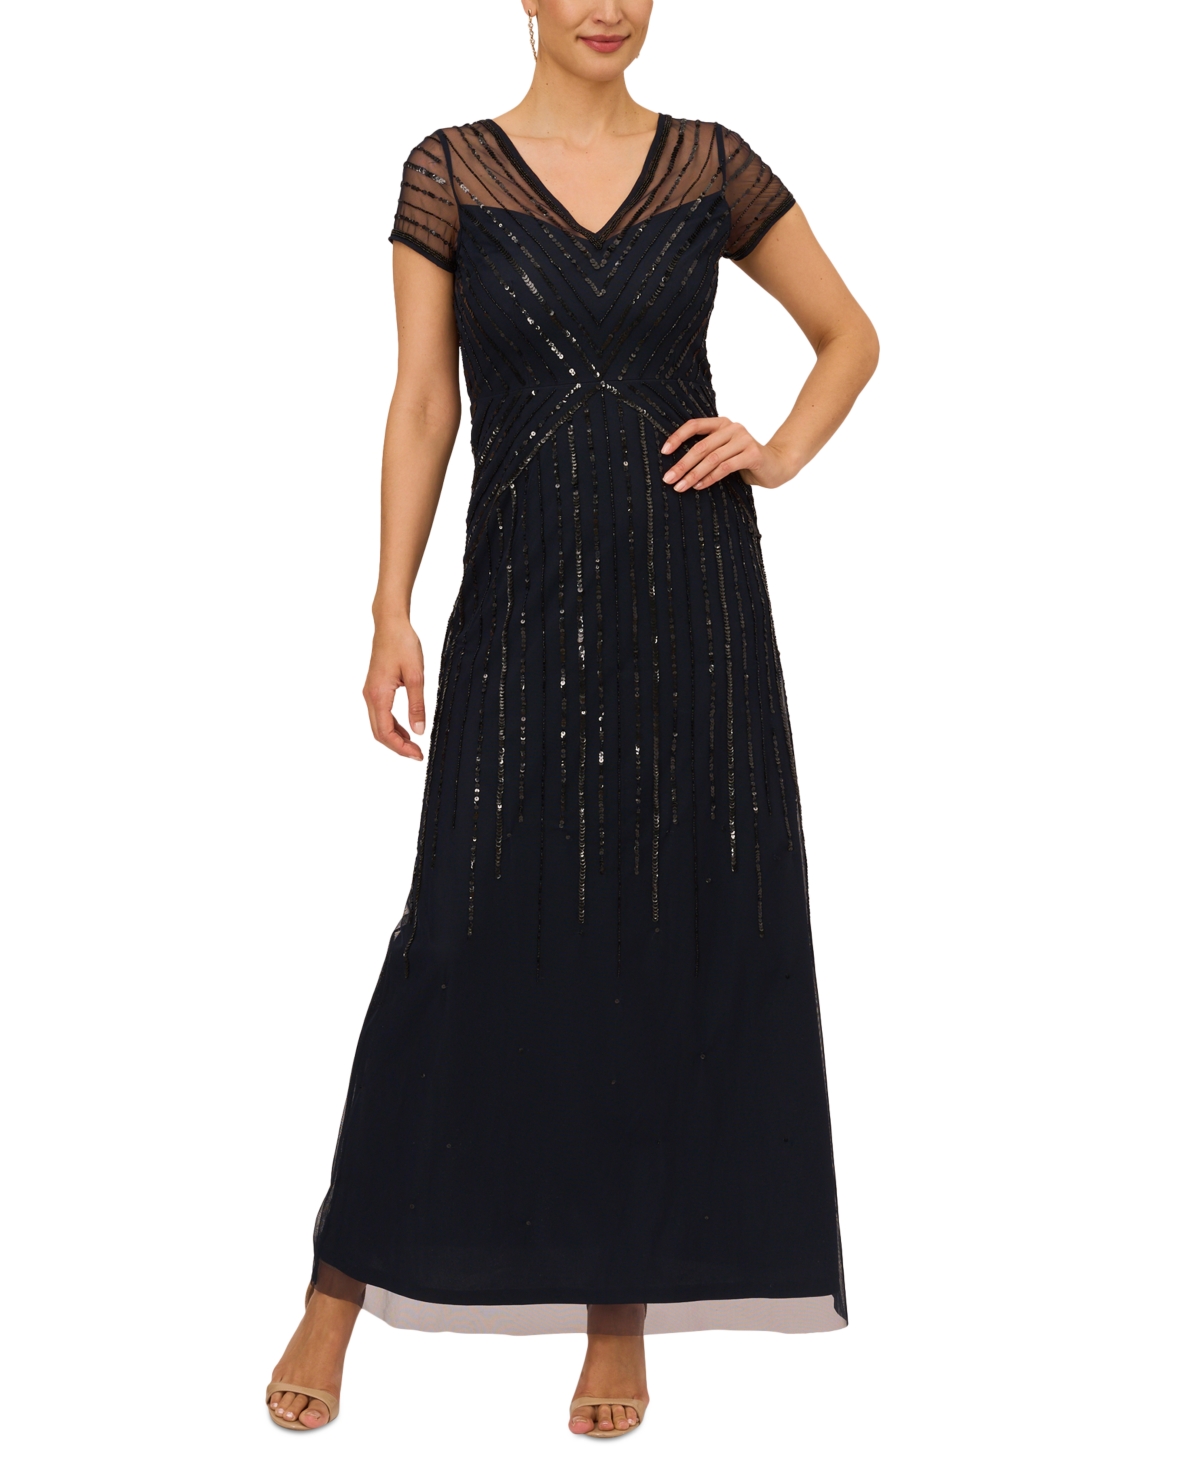 Buy Boardwalk Empire Inspired Dresses Papell Studio Womens V-Neck Short-Sleeve Sequin Gown - MidnightBlack $159.00 AT vintagedancer.com